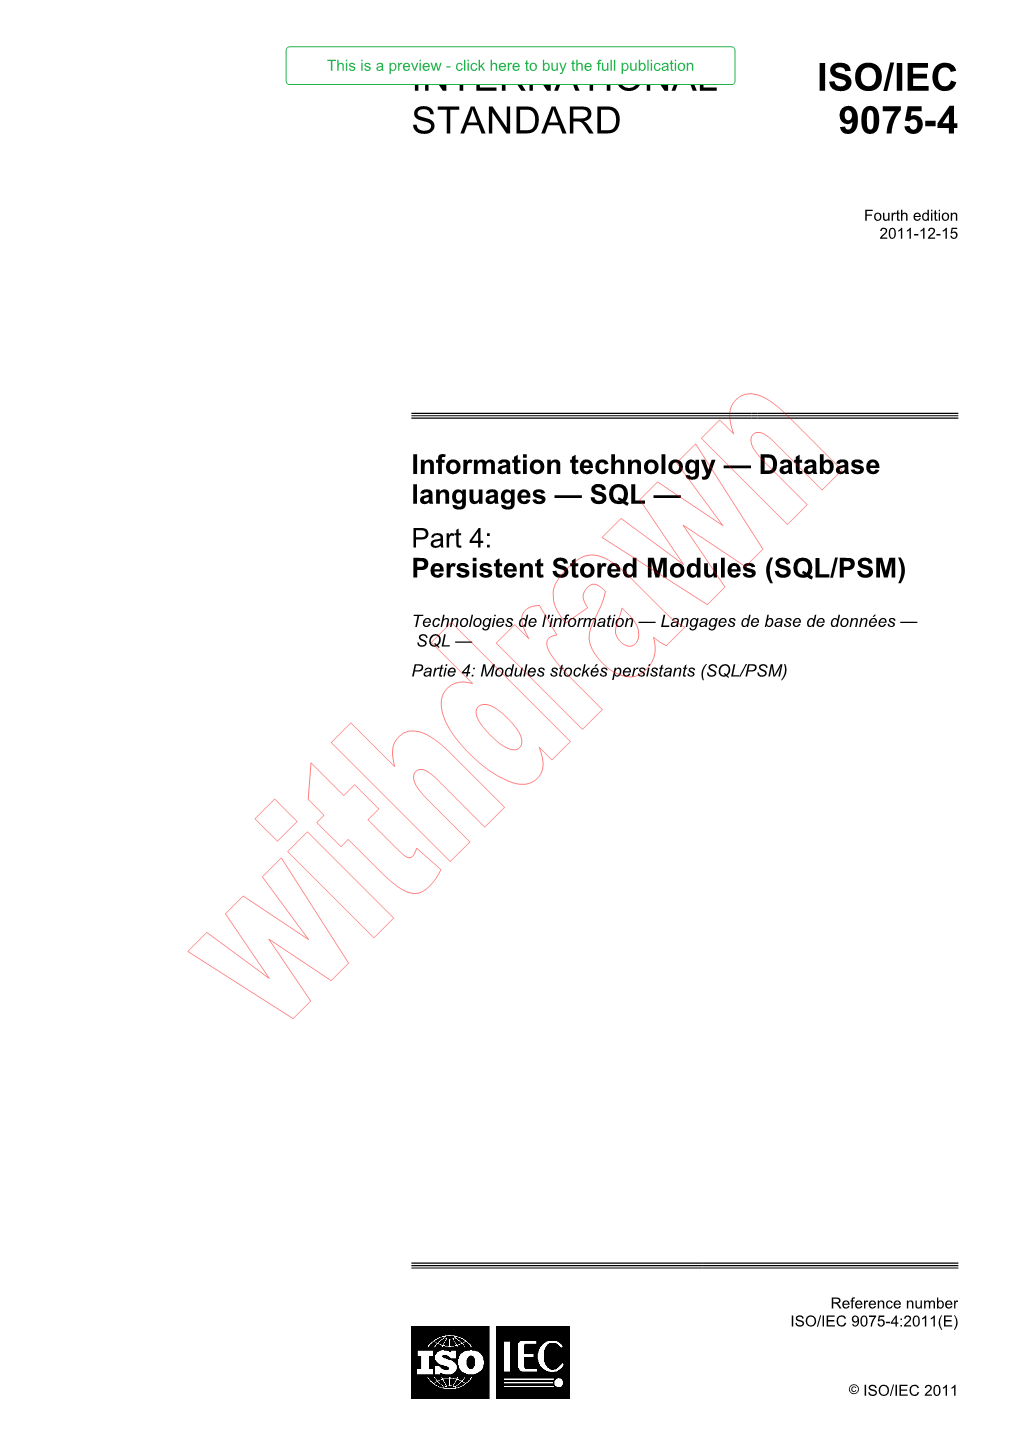 International Standard Iso/Iec 9075-4